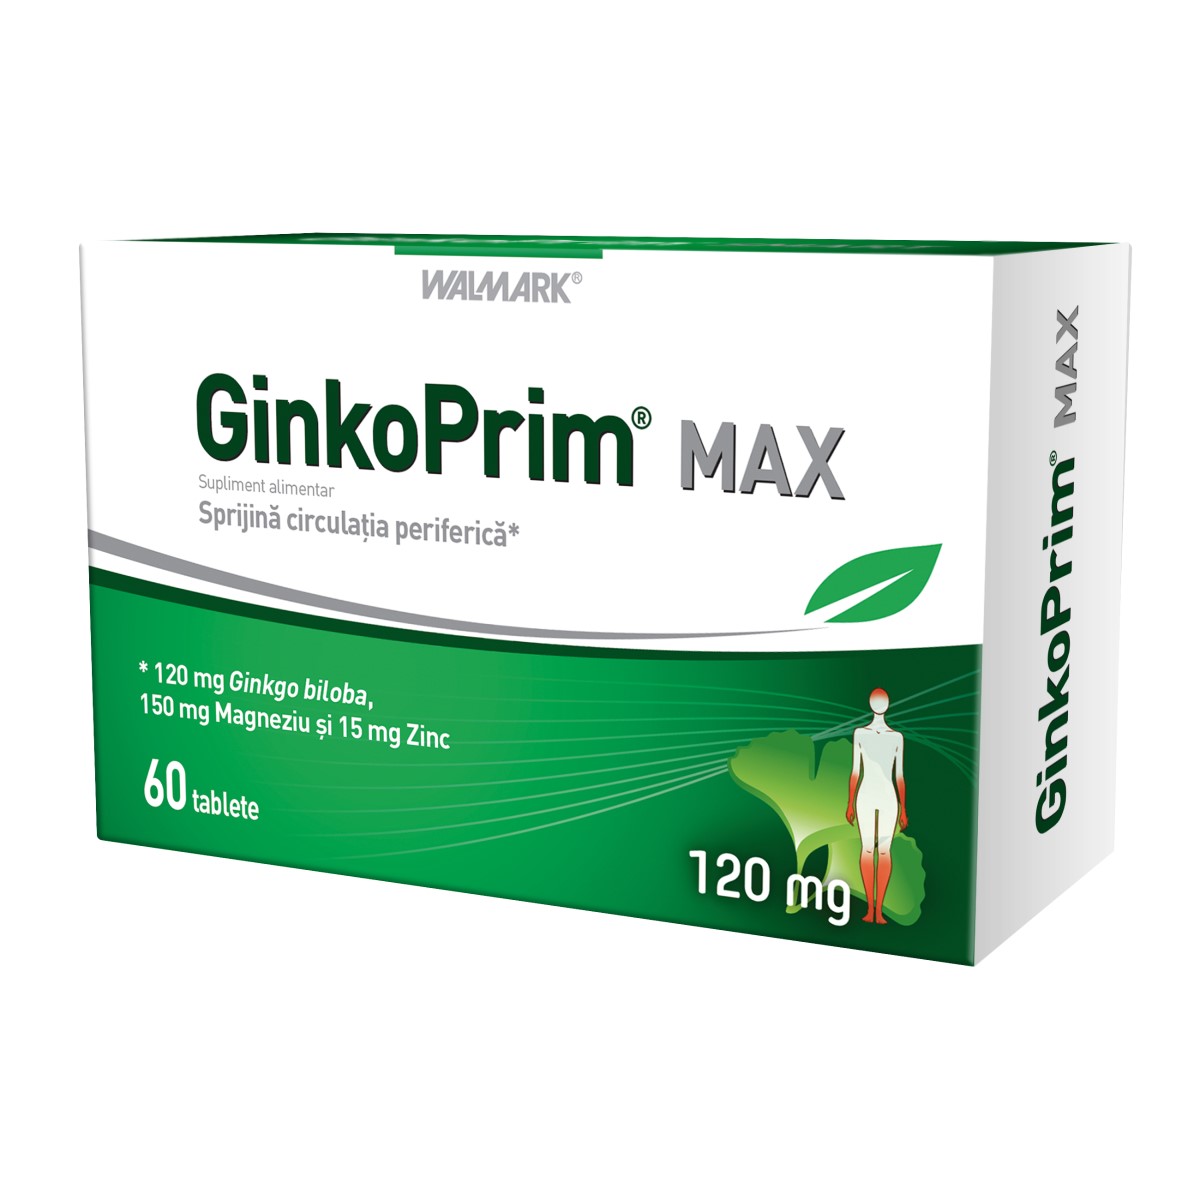 GinkoPrim Max Walmark, circulatie periferica, 60 tablete